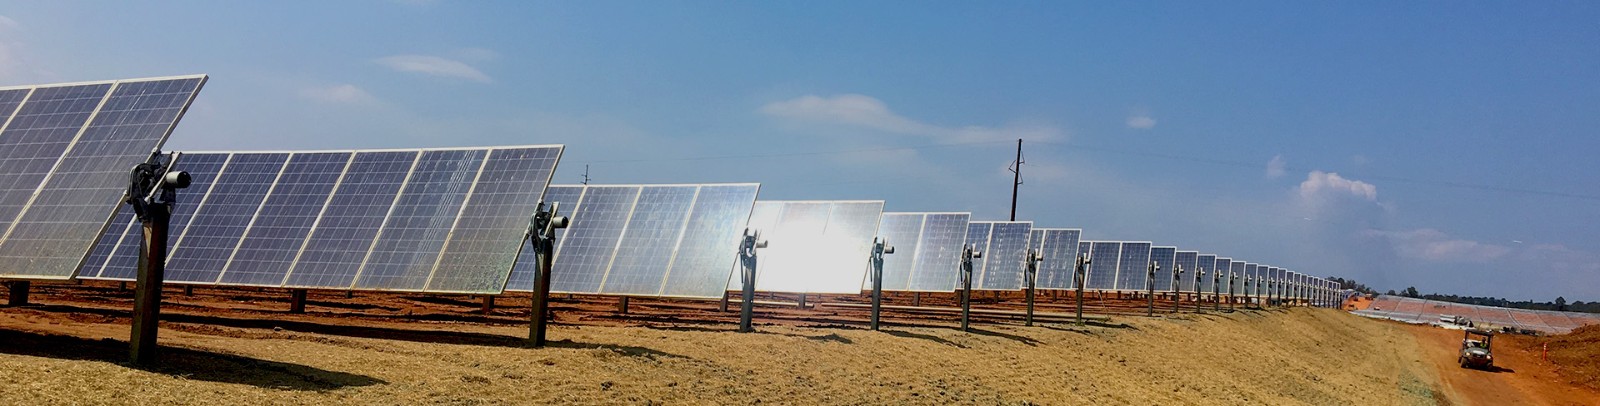 farm of solar panels